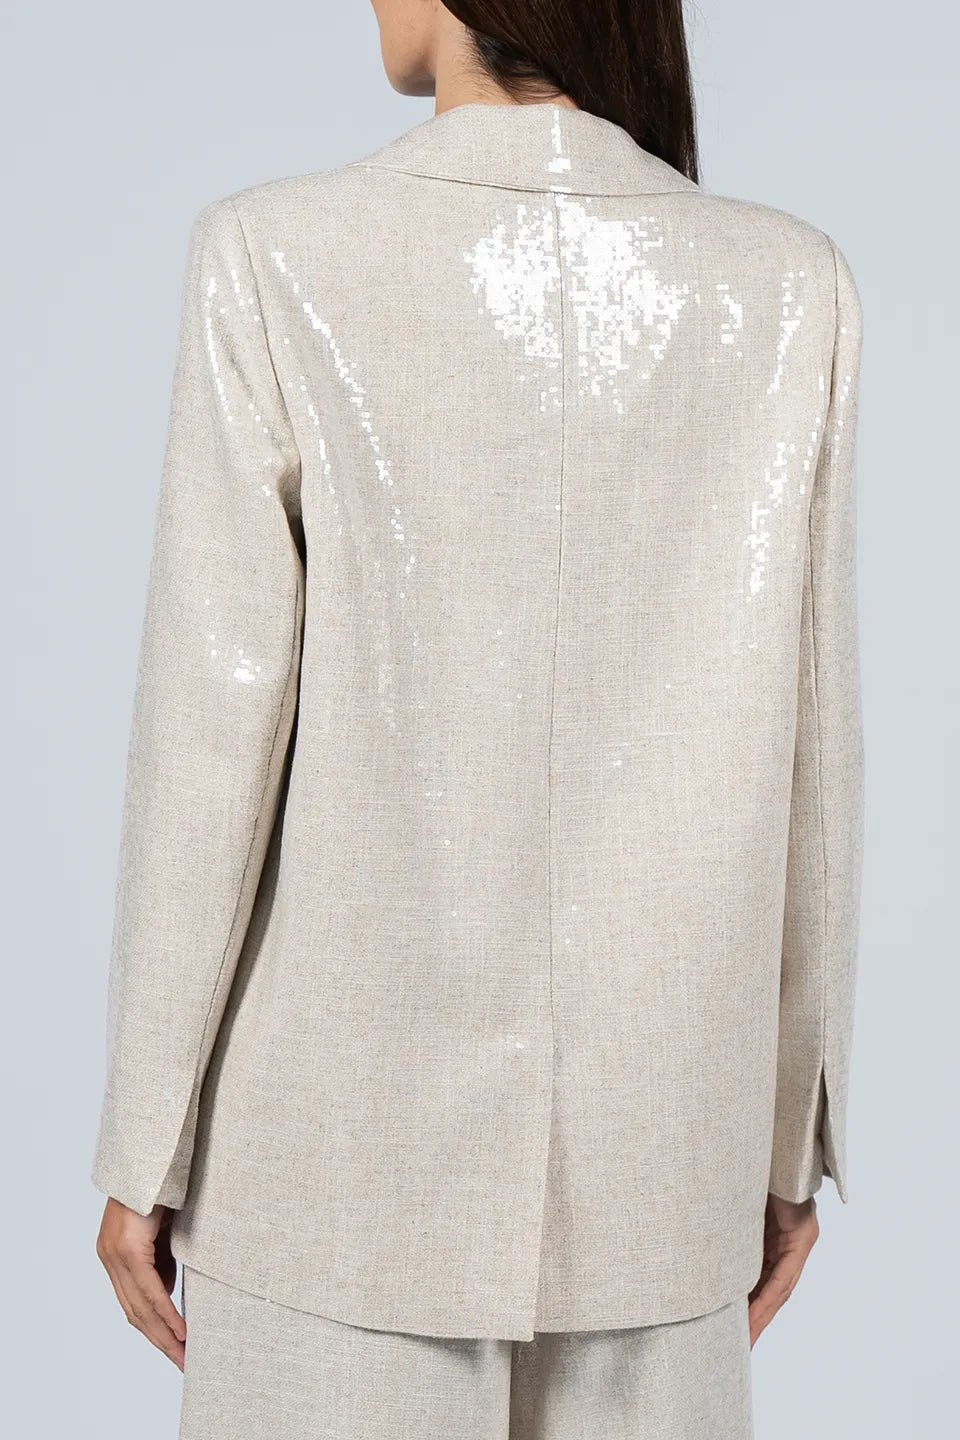 Designer Beige Women blazers, Jacket, shop online with free delivery in UAE. Product gallery 6